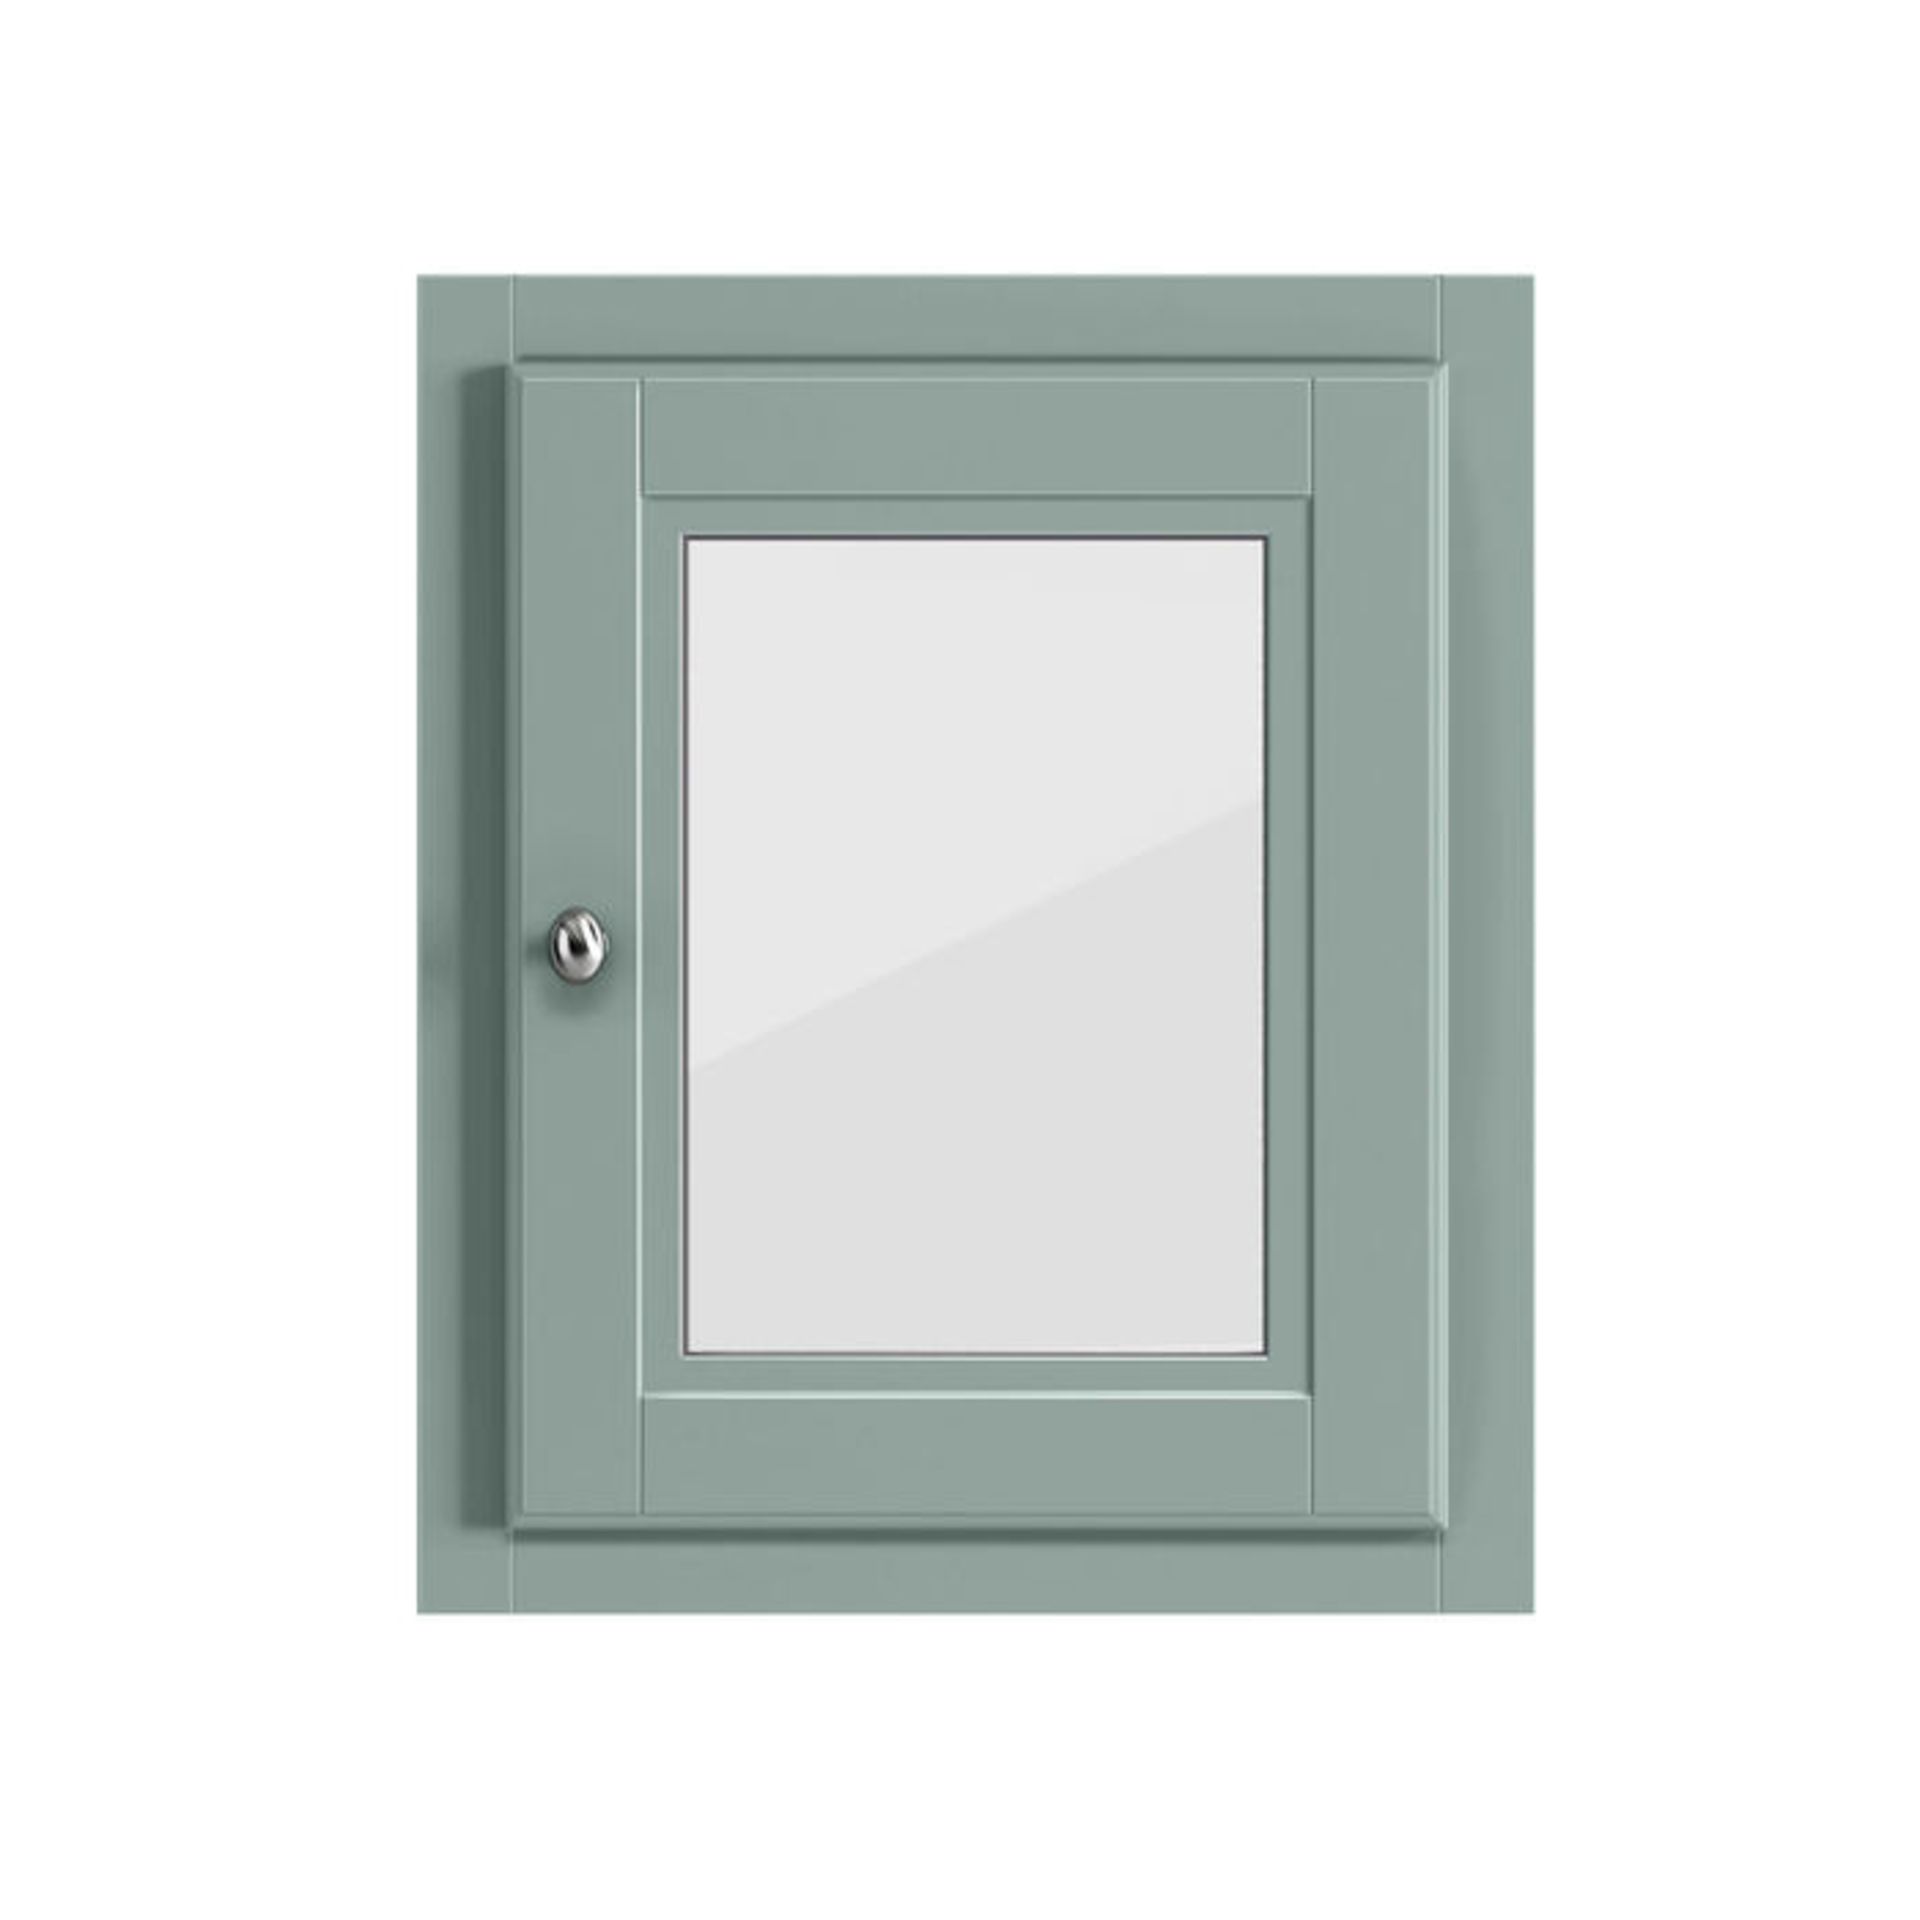 (CS208) Cambridge Single Door Mirror Cabinet - Marine Mist. RRP £199.99. Traditional aesthetic - Image 4 of 4